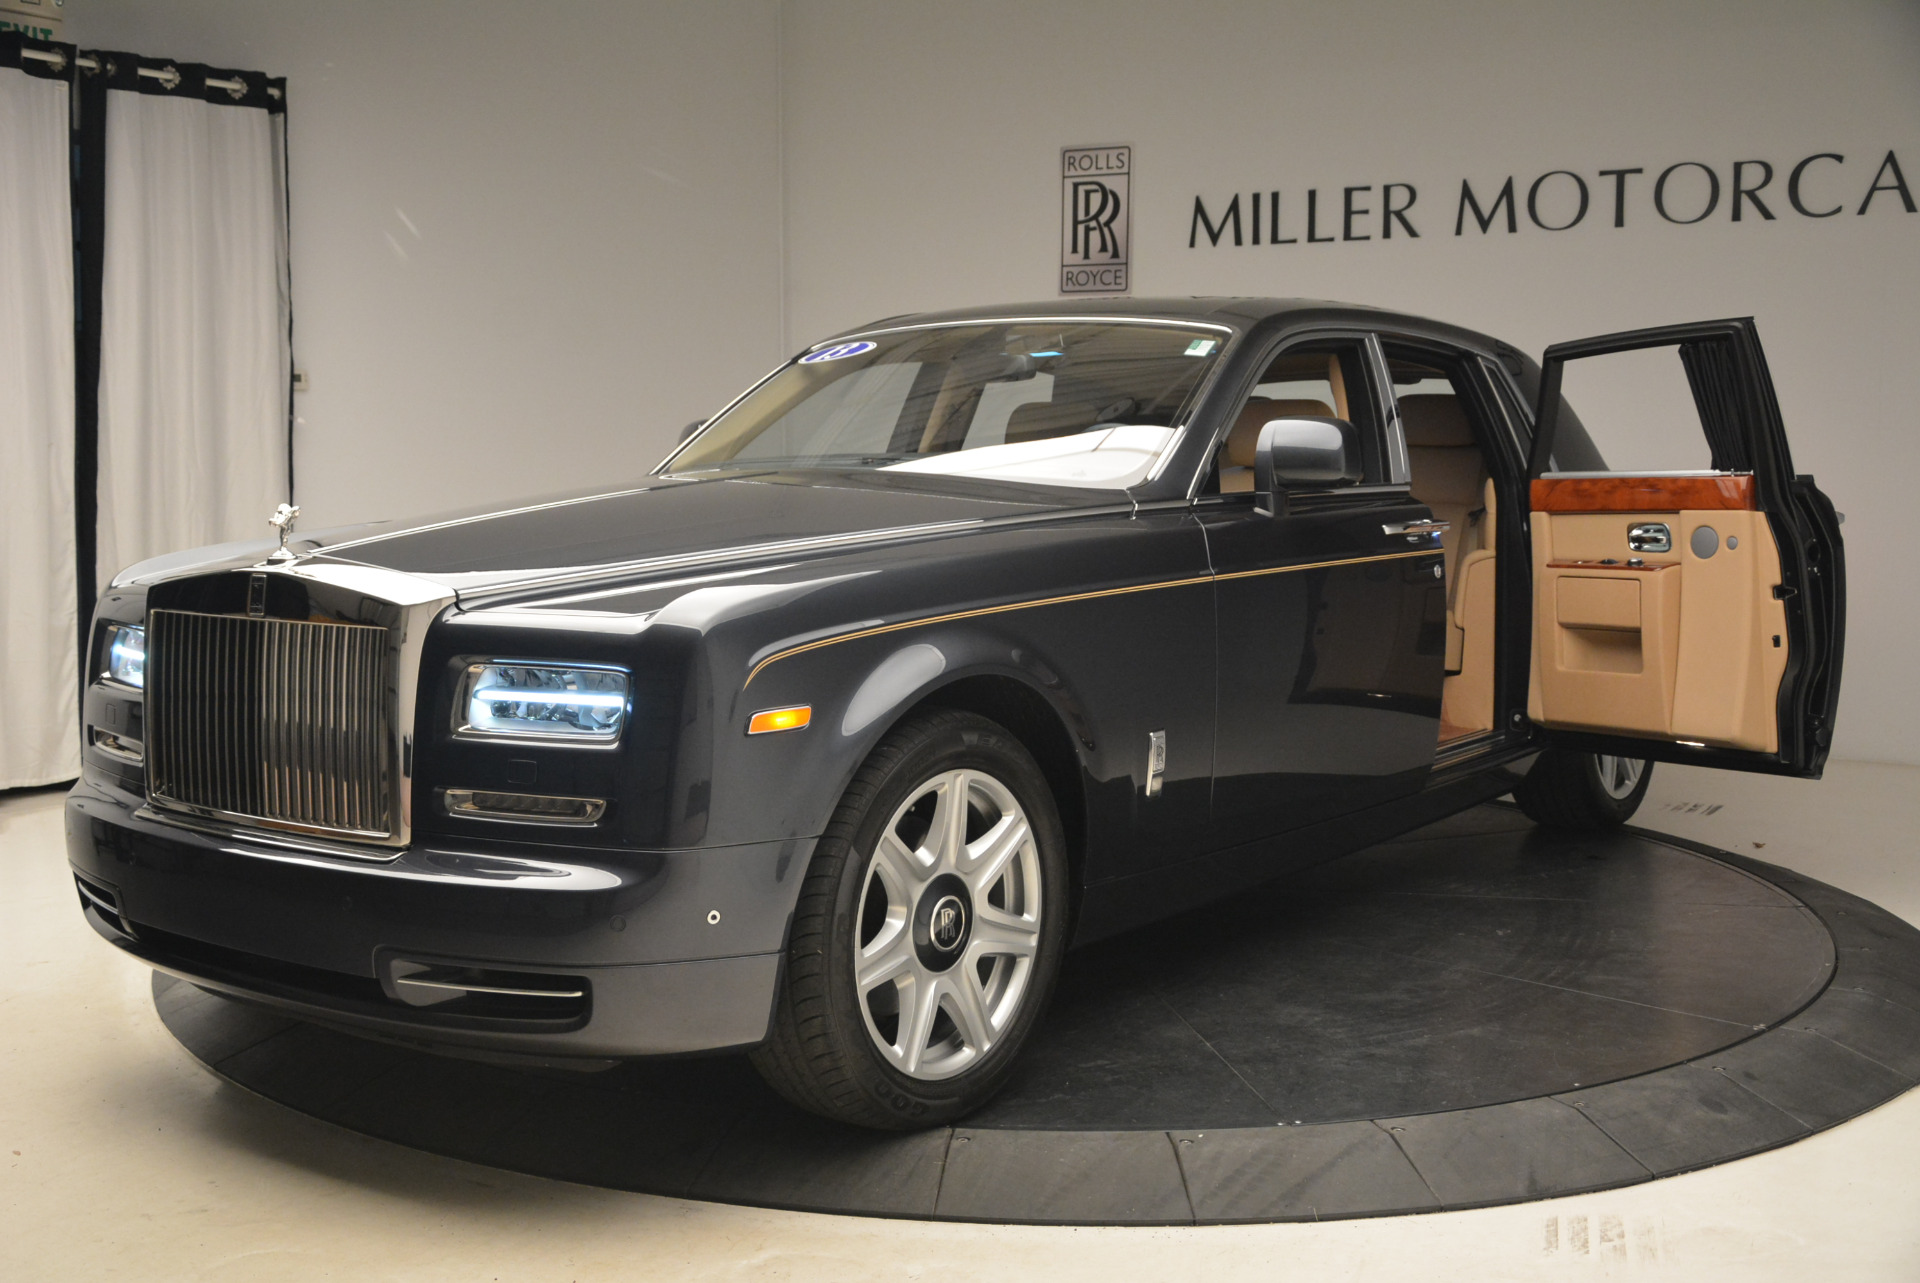 2013 Rolls Royce Phantom Series II Start Up Exhaust and In Depth Review   YouTube